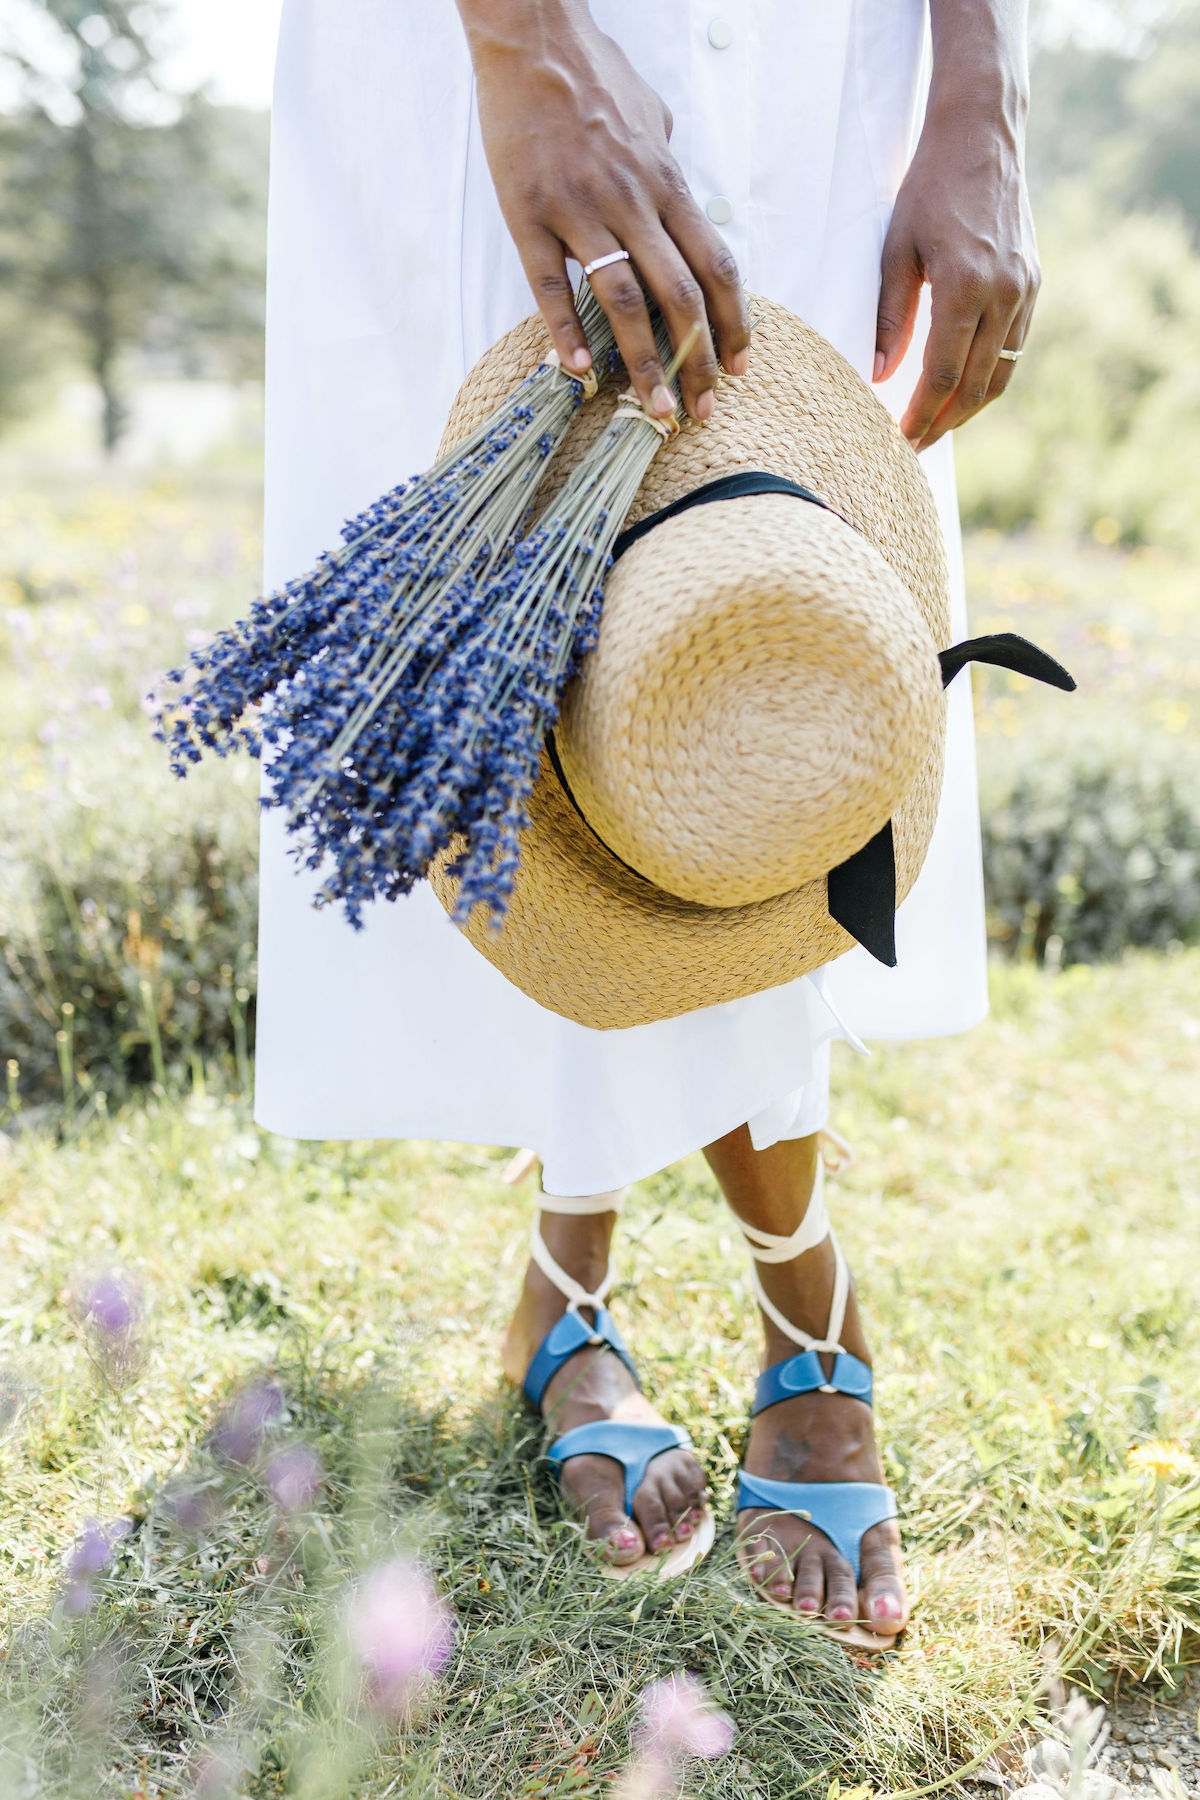 Sharifa Samora blue Grear Sandals Sarah Flint lavender field